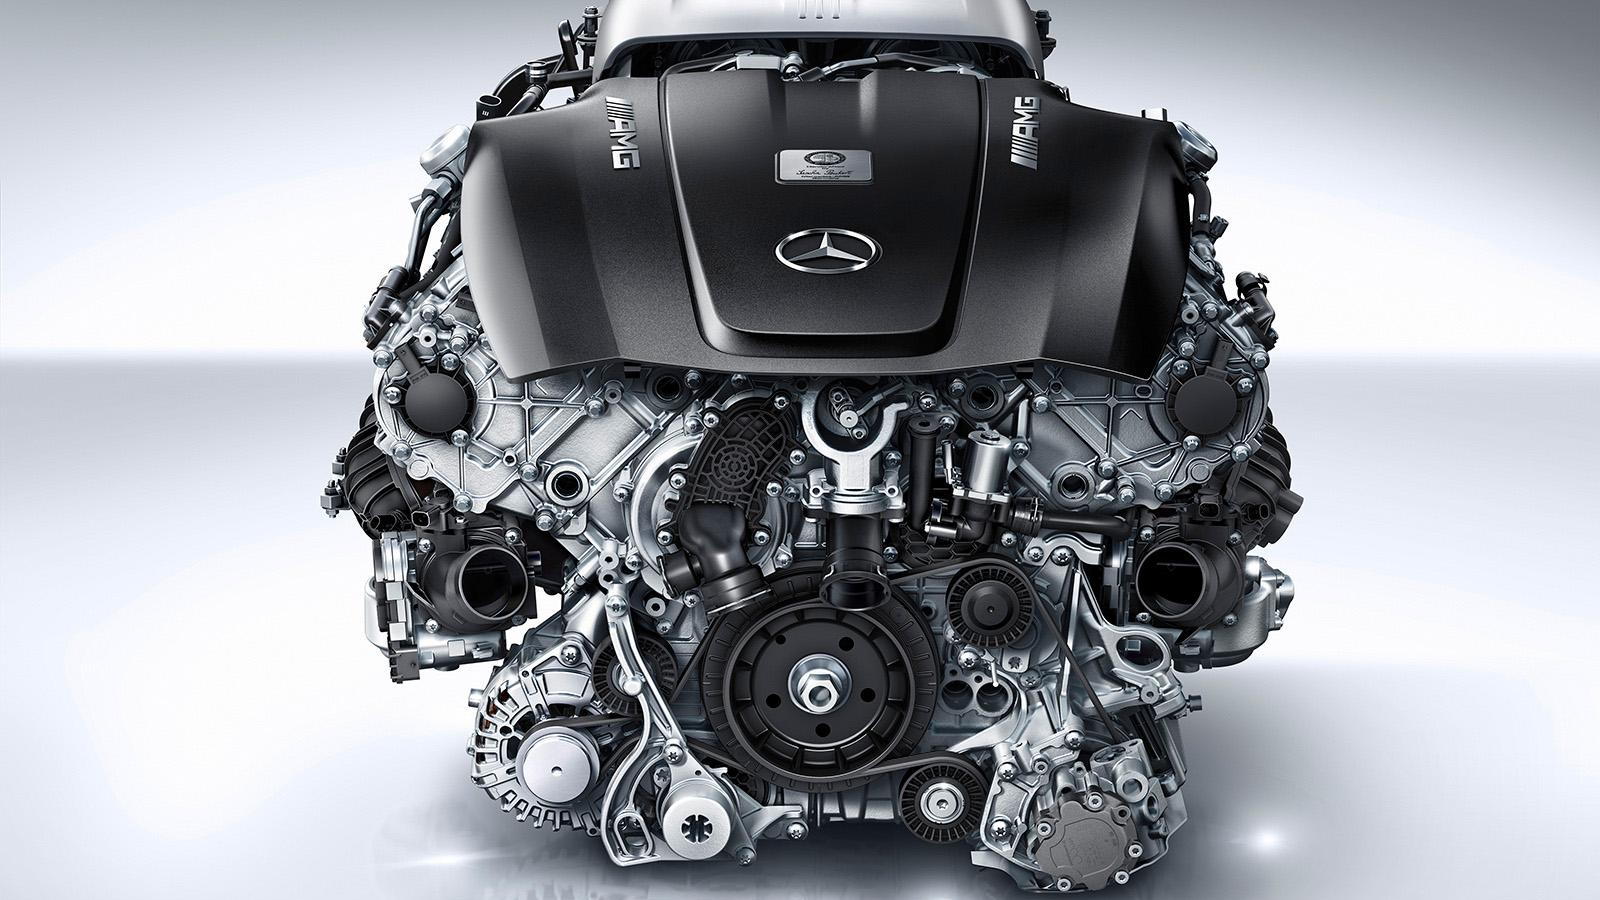 Mercedes-AMG M178 engine